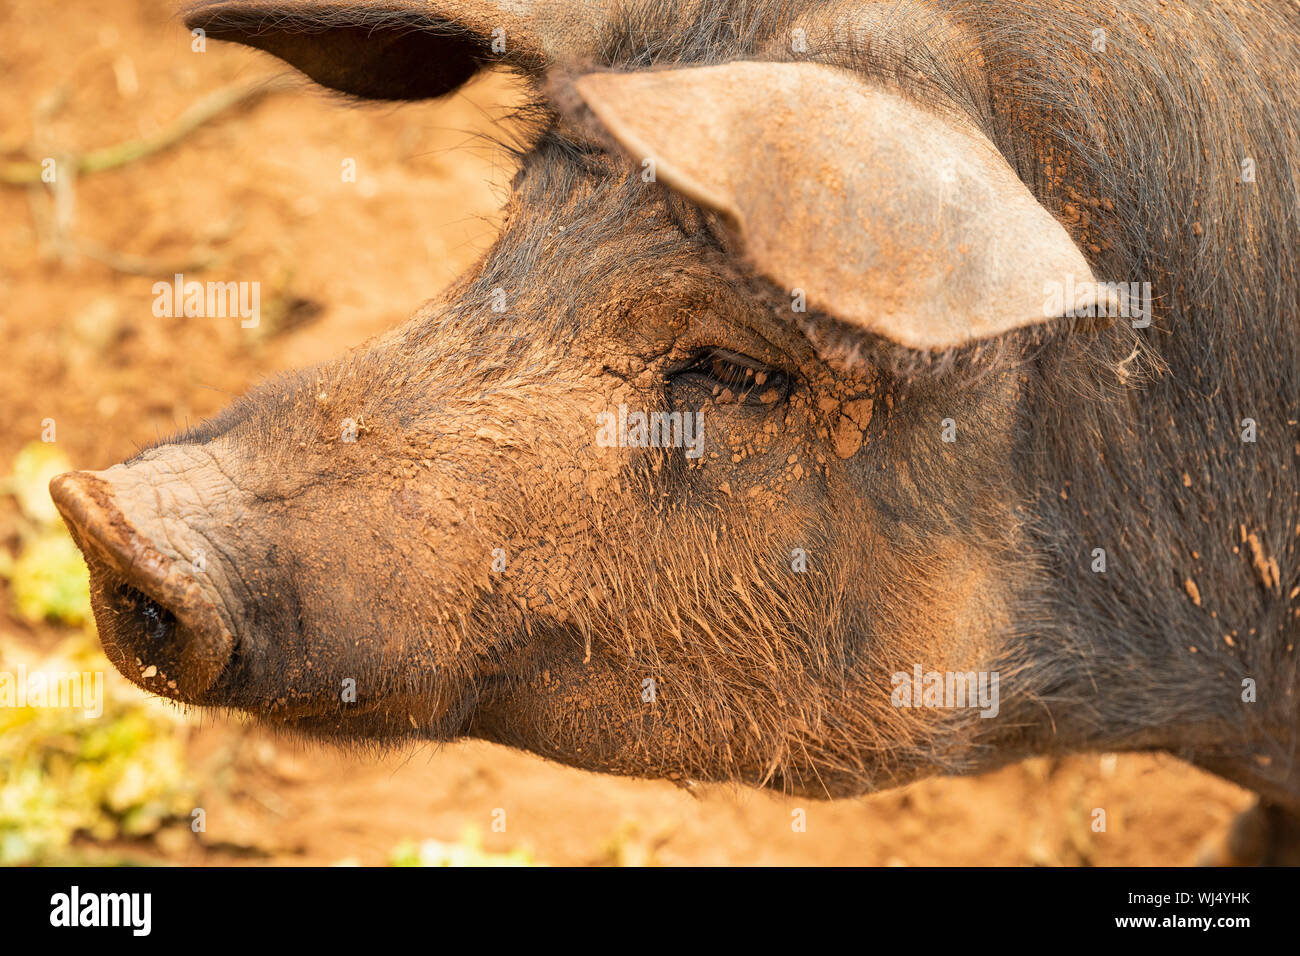 Close up profile muddy free range pig Banque D'Images